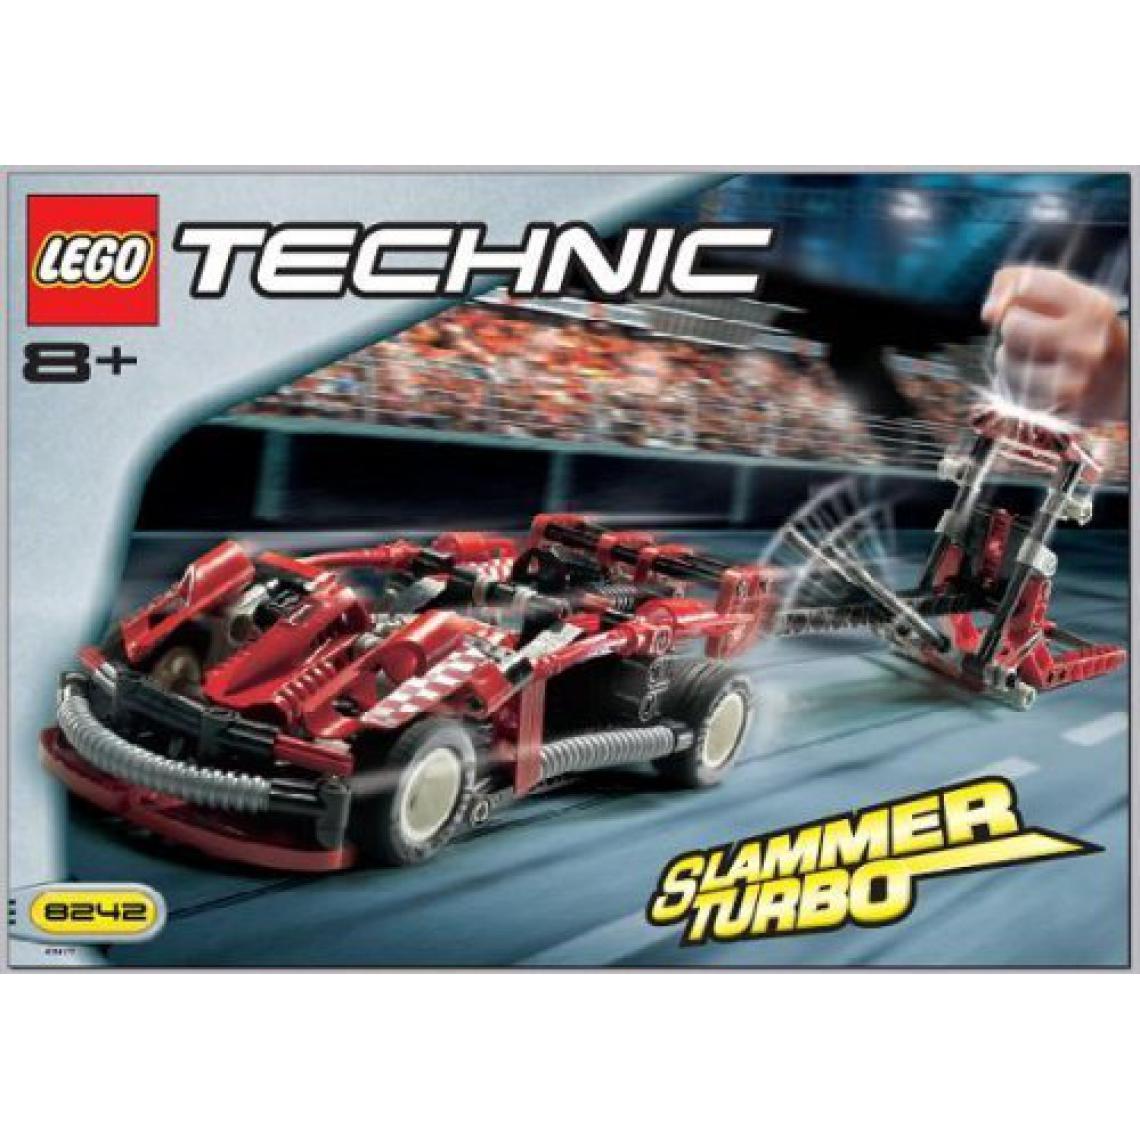 Lego - Lego Technic 8242 Slammer Turbo - Briques et blocs